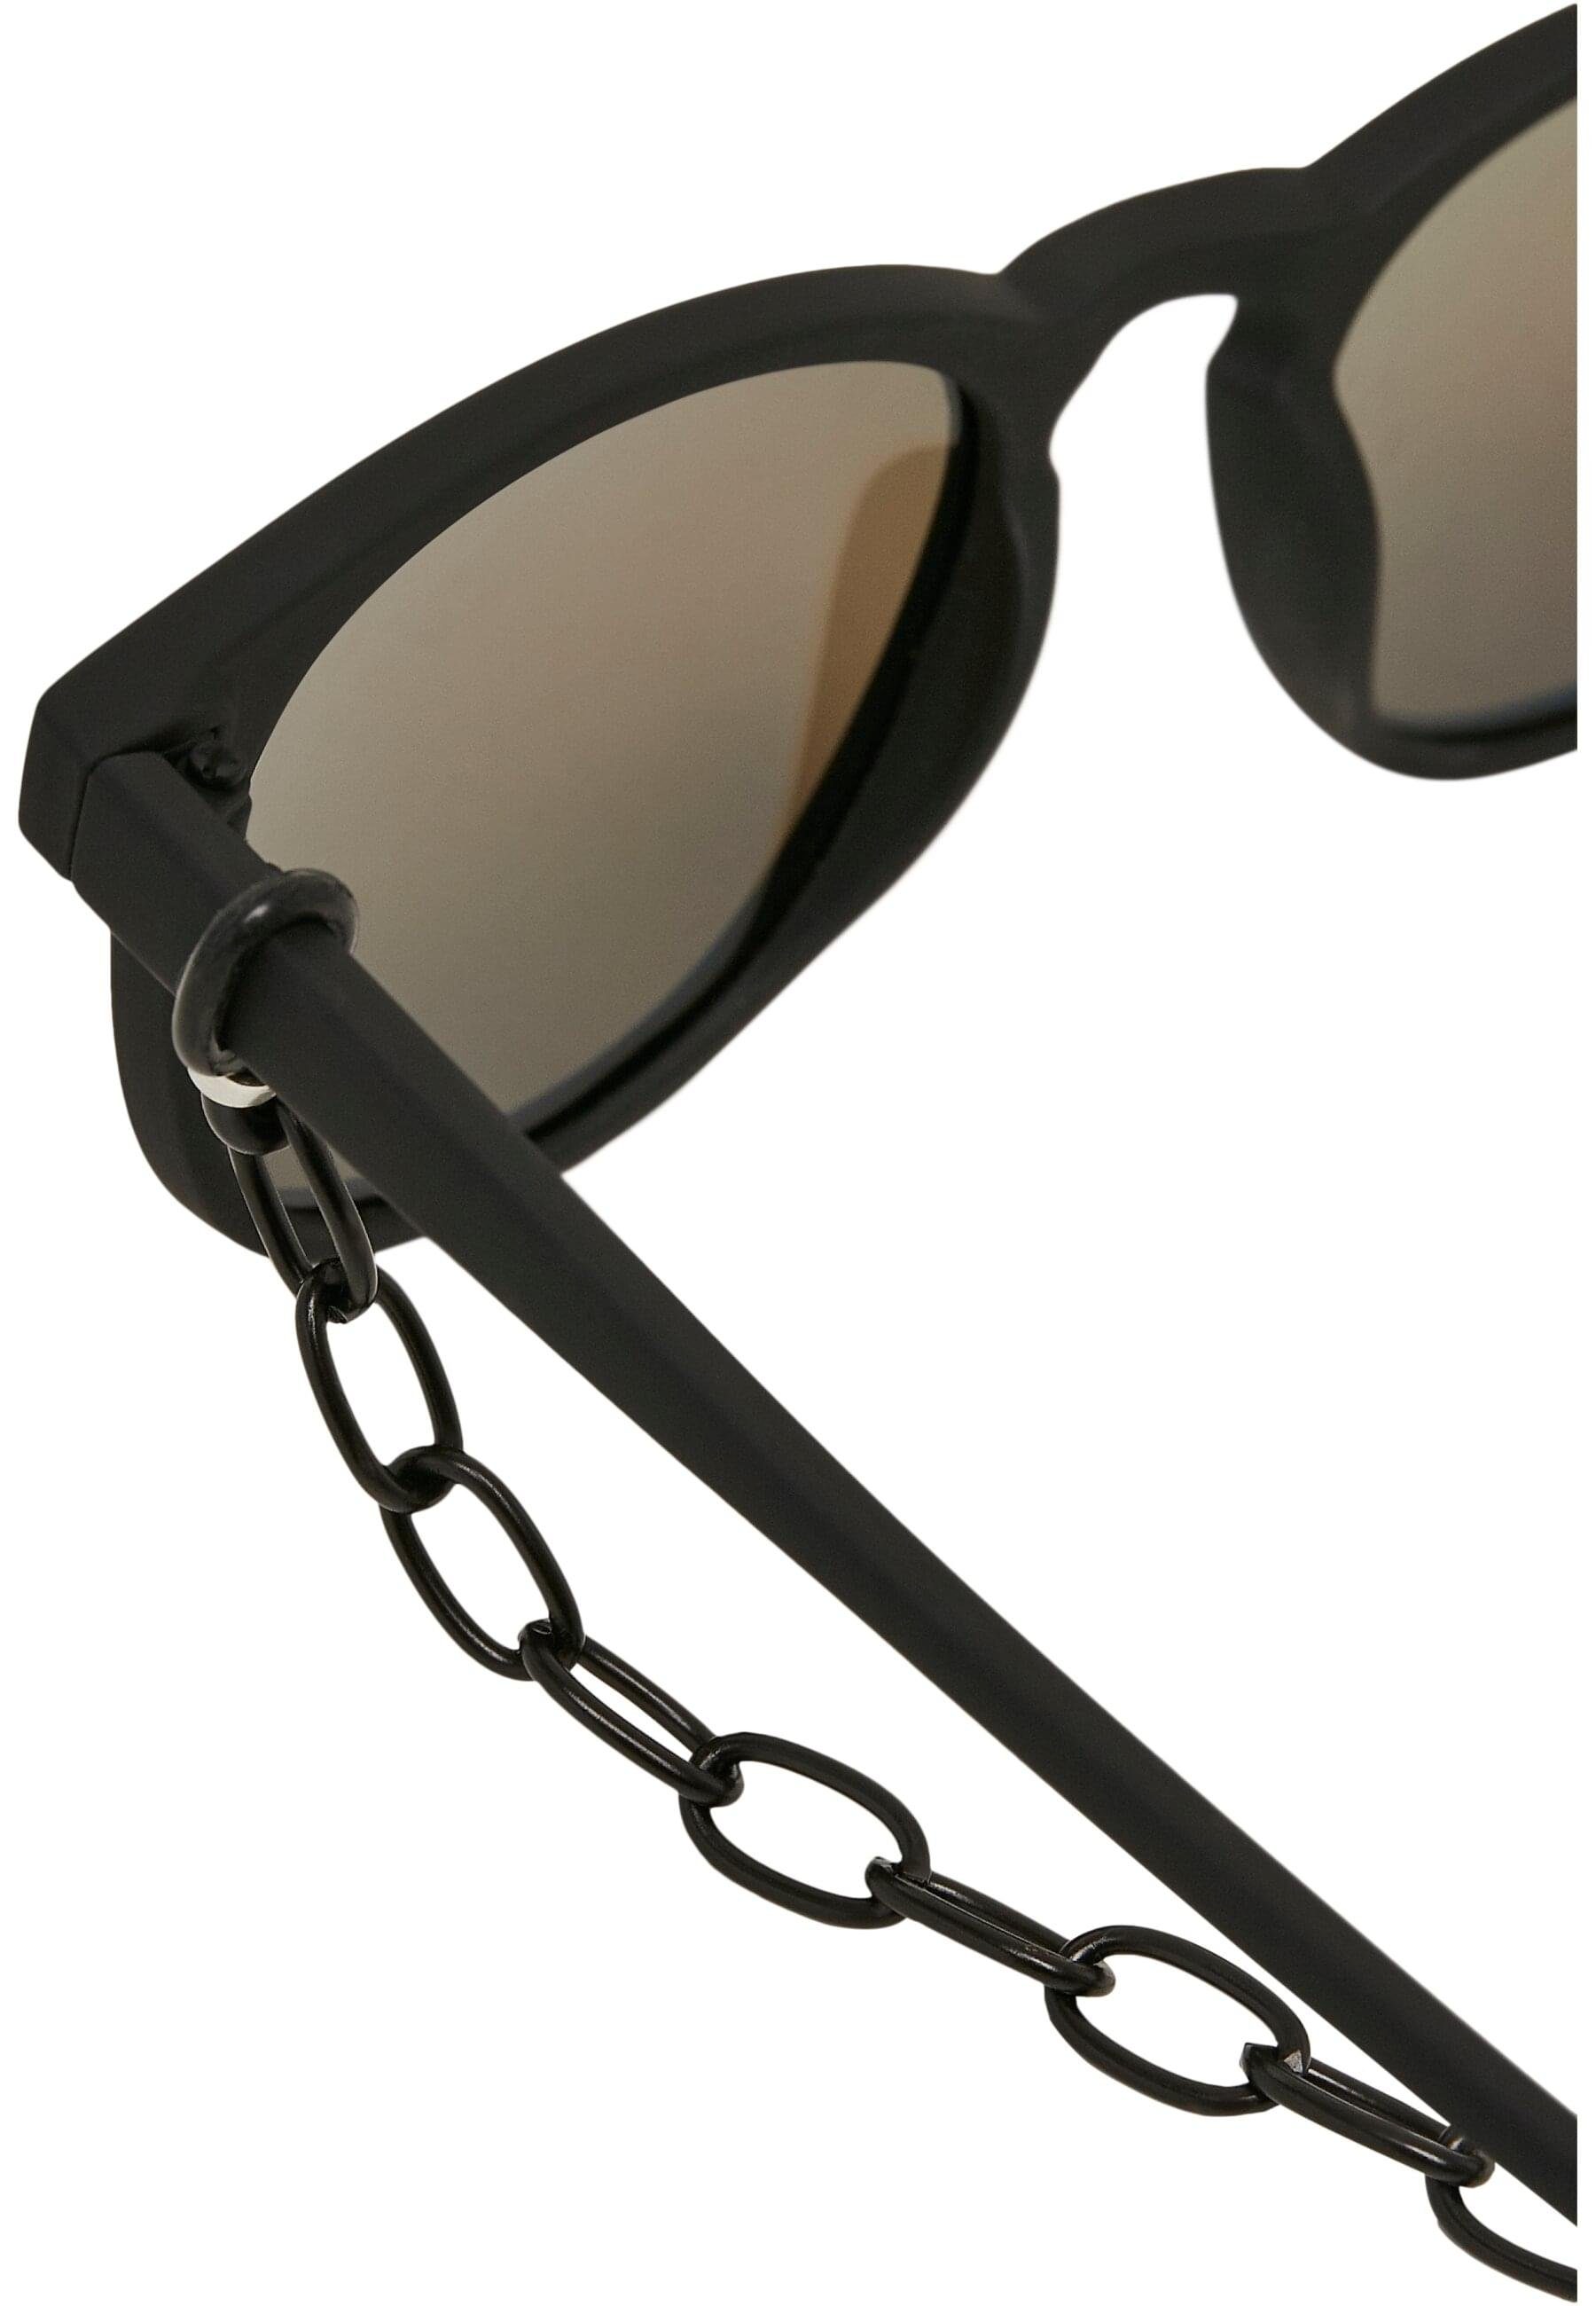 URBAN CLASSICS Sonnenbrille Sunglasses black/blue Chain Arthur Unisex with